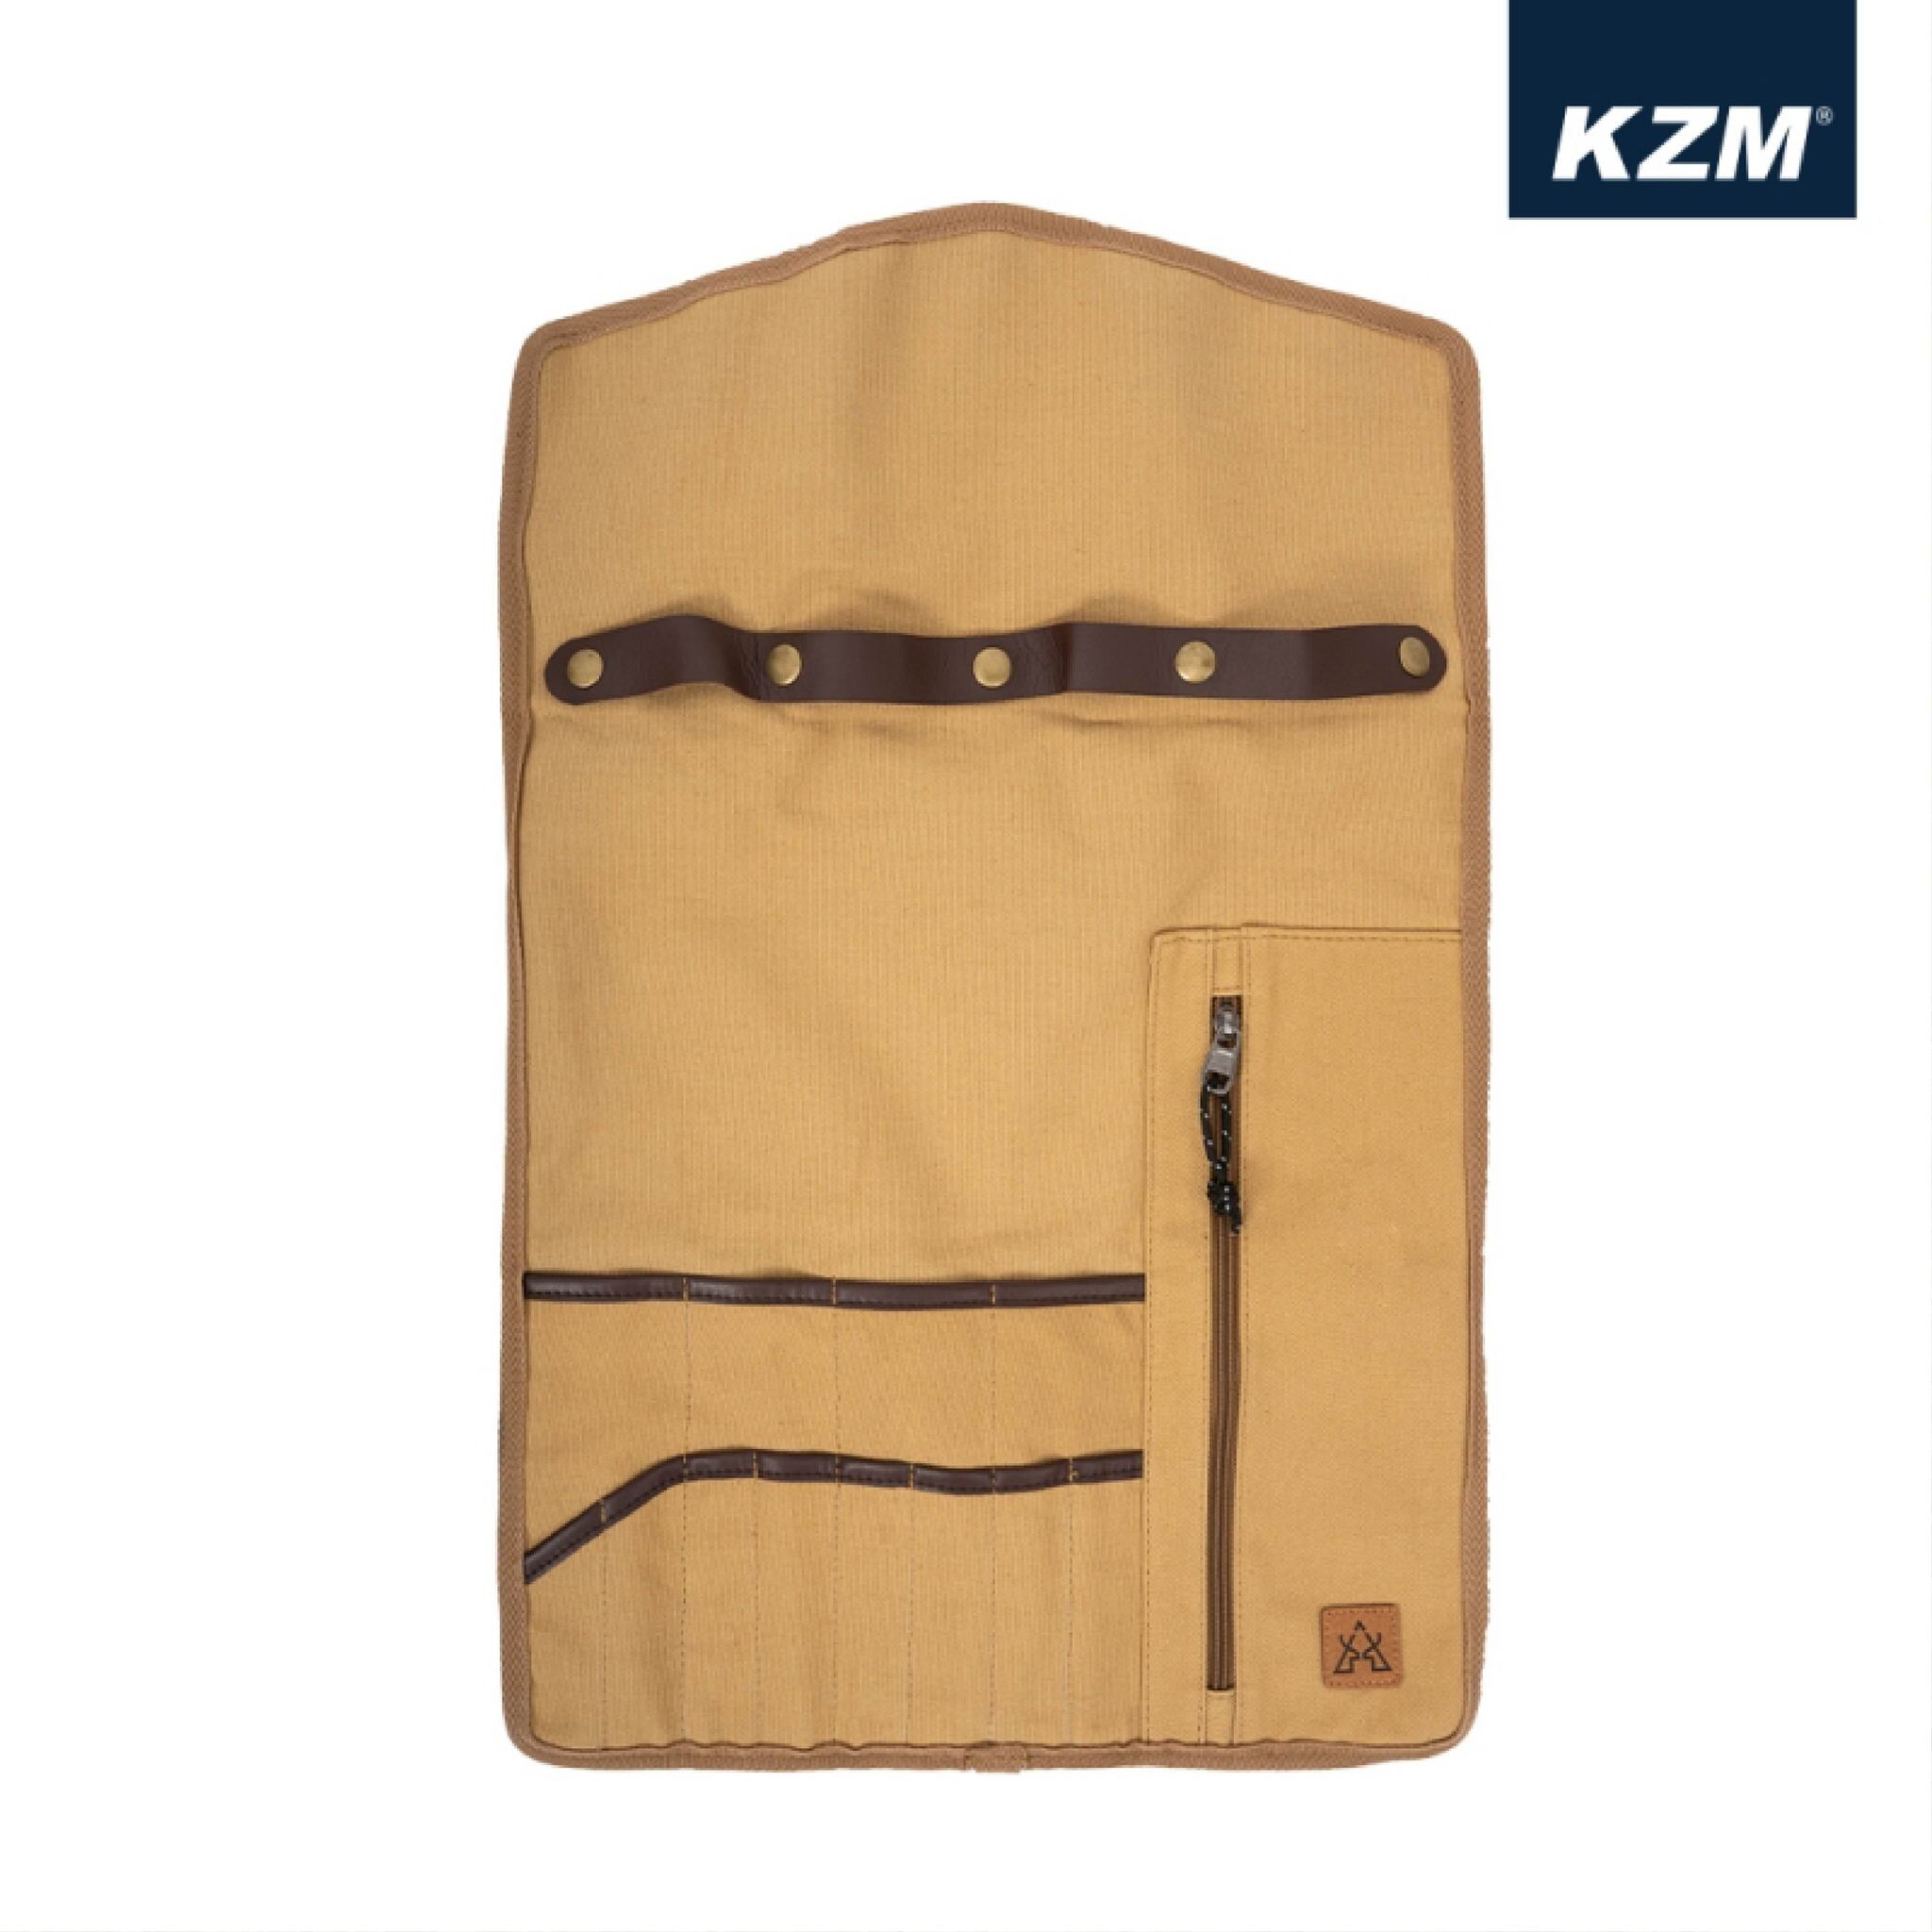 【KZM】KAZMI 風格廚具置物袋 卡其色 K21T3K02BW